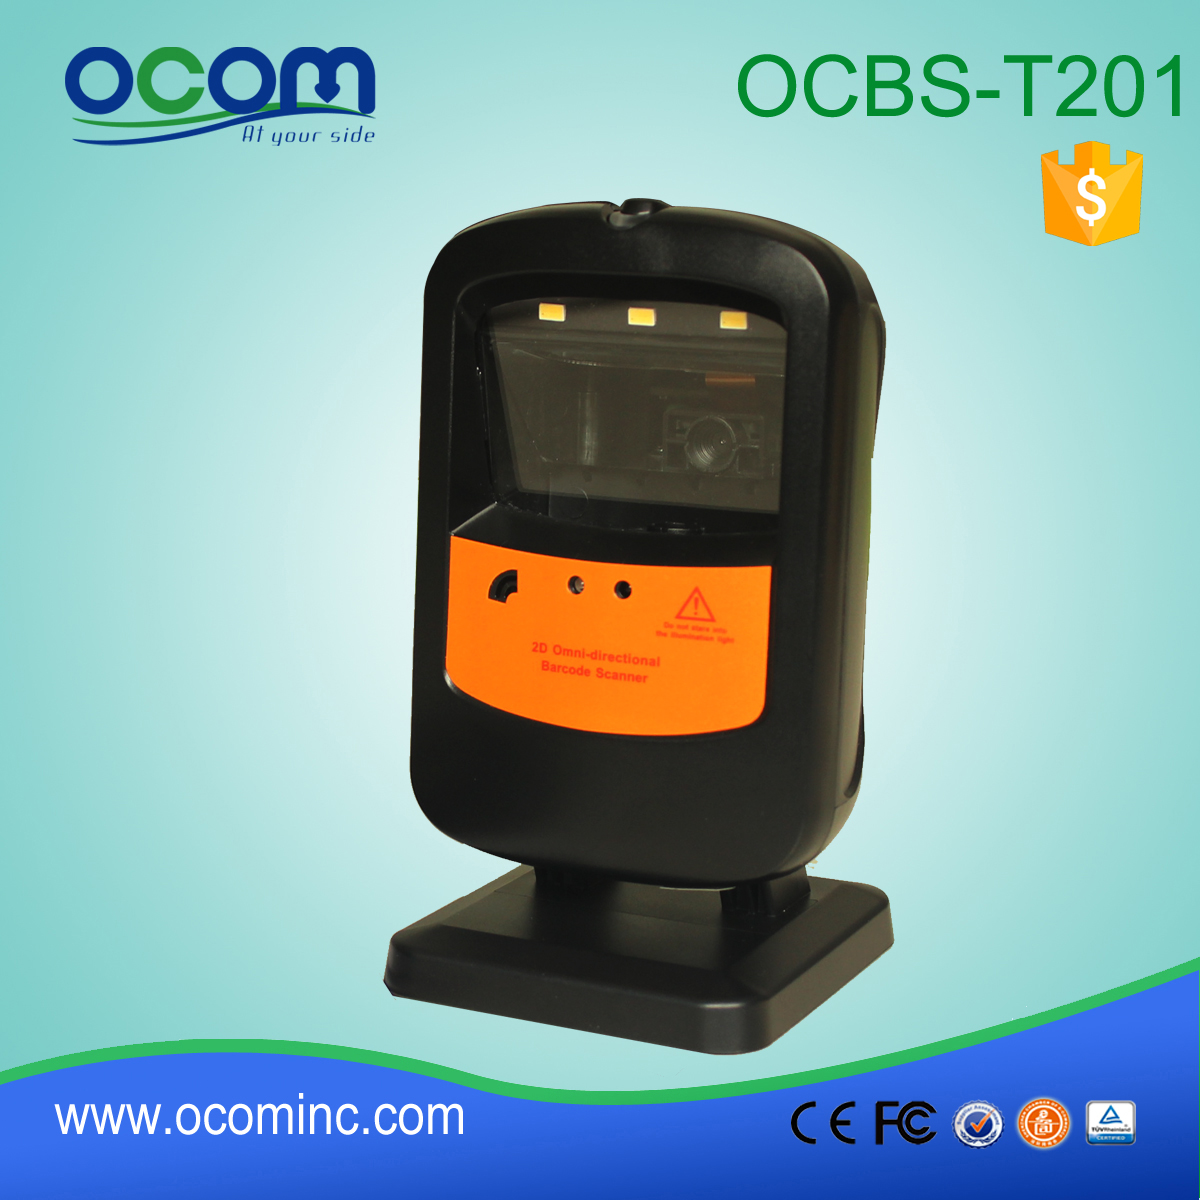 OCBs-T201: Μη κατευθυντική RS232 scanner barcode, barcode scanner απογραφή